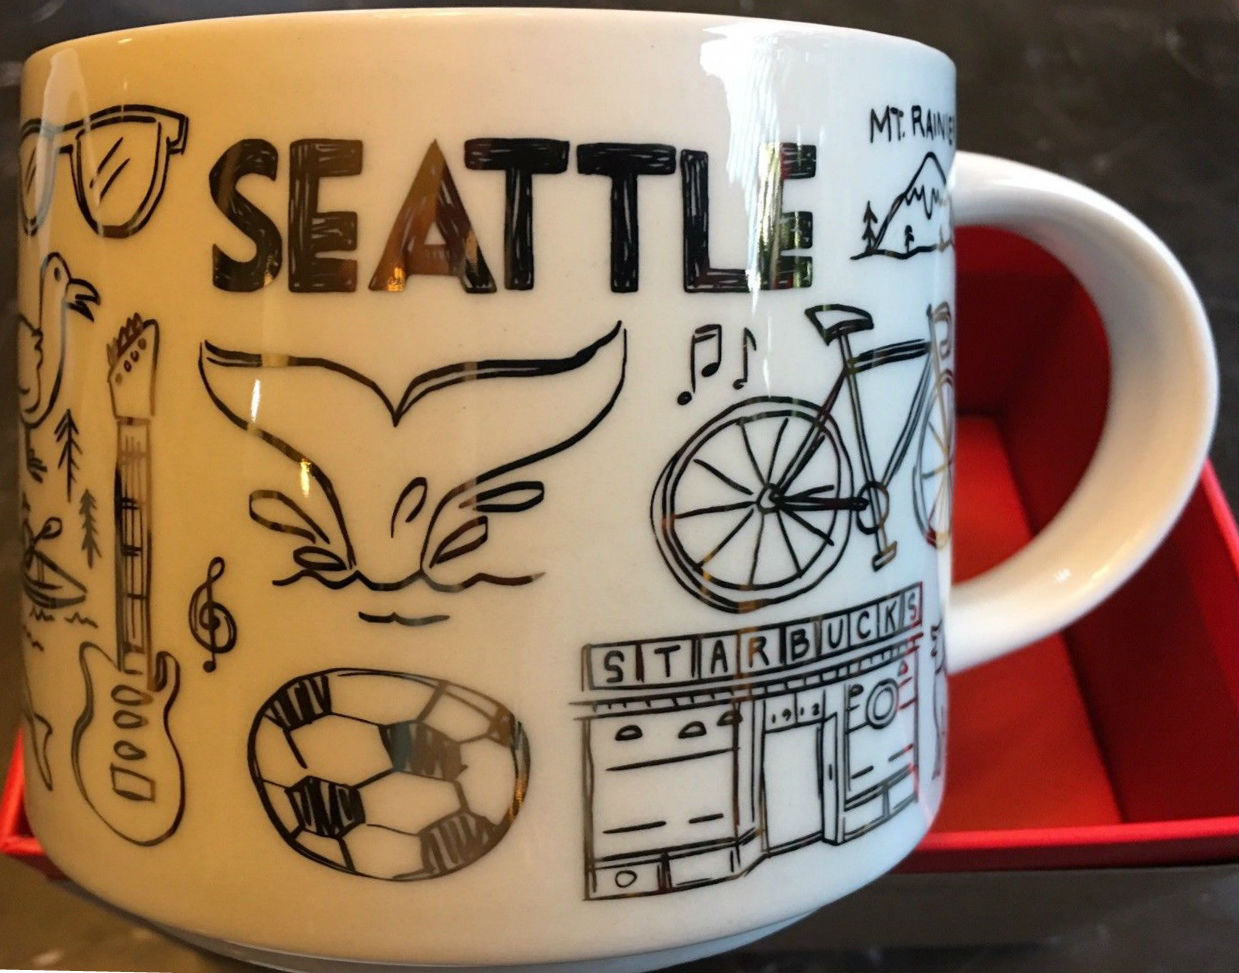 Starbucks Been There Collection Washington Ceramic Mug – Seattle